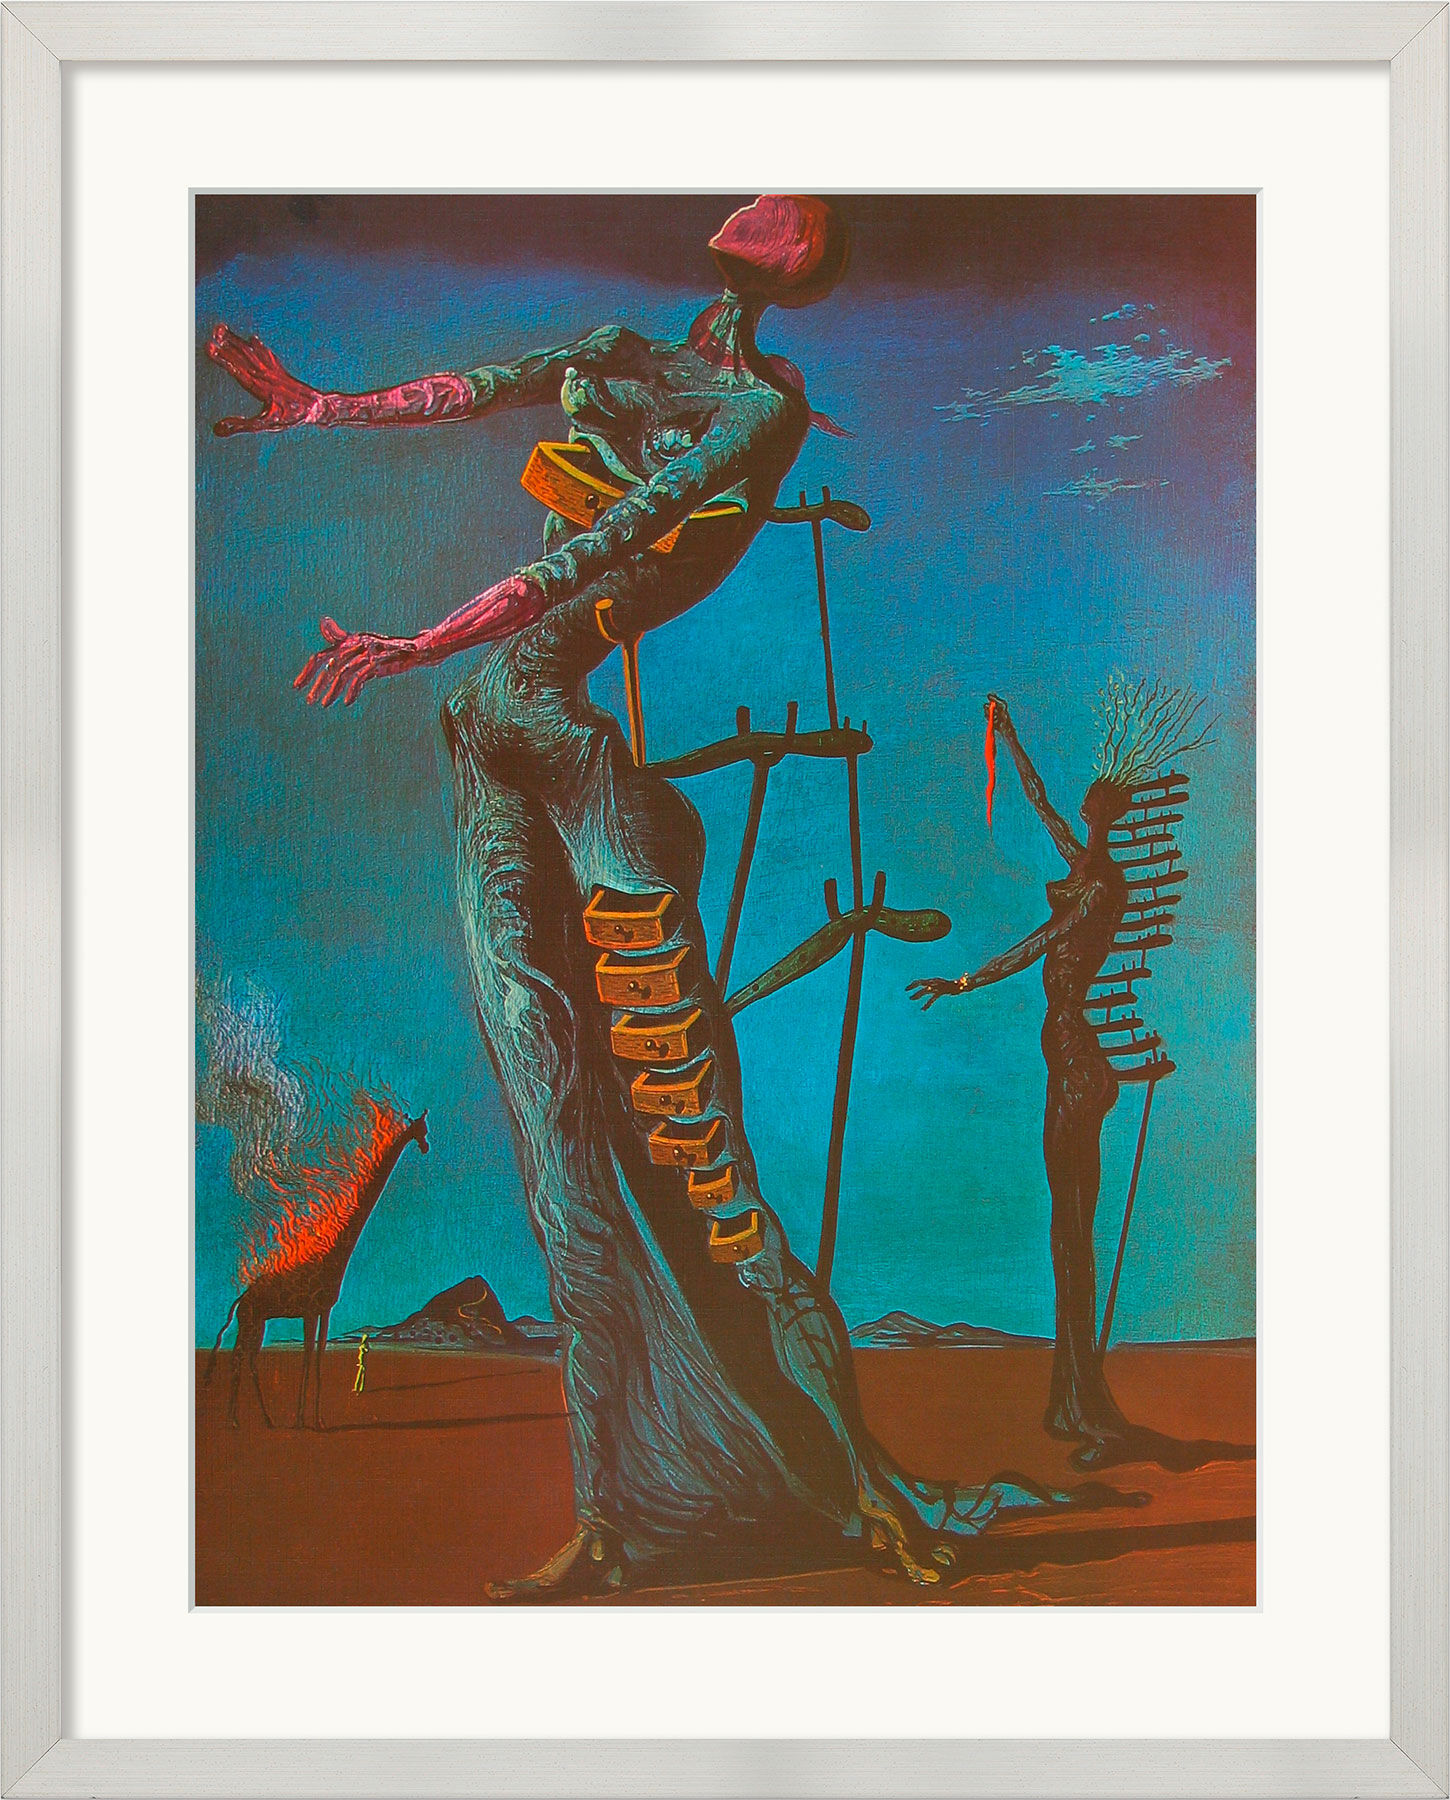 Picture "The Burning Giraffe" (1935), framed by Salvador Dalí